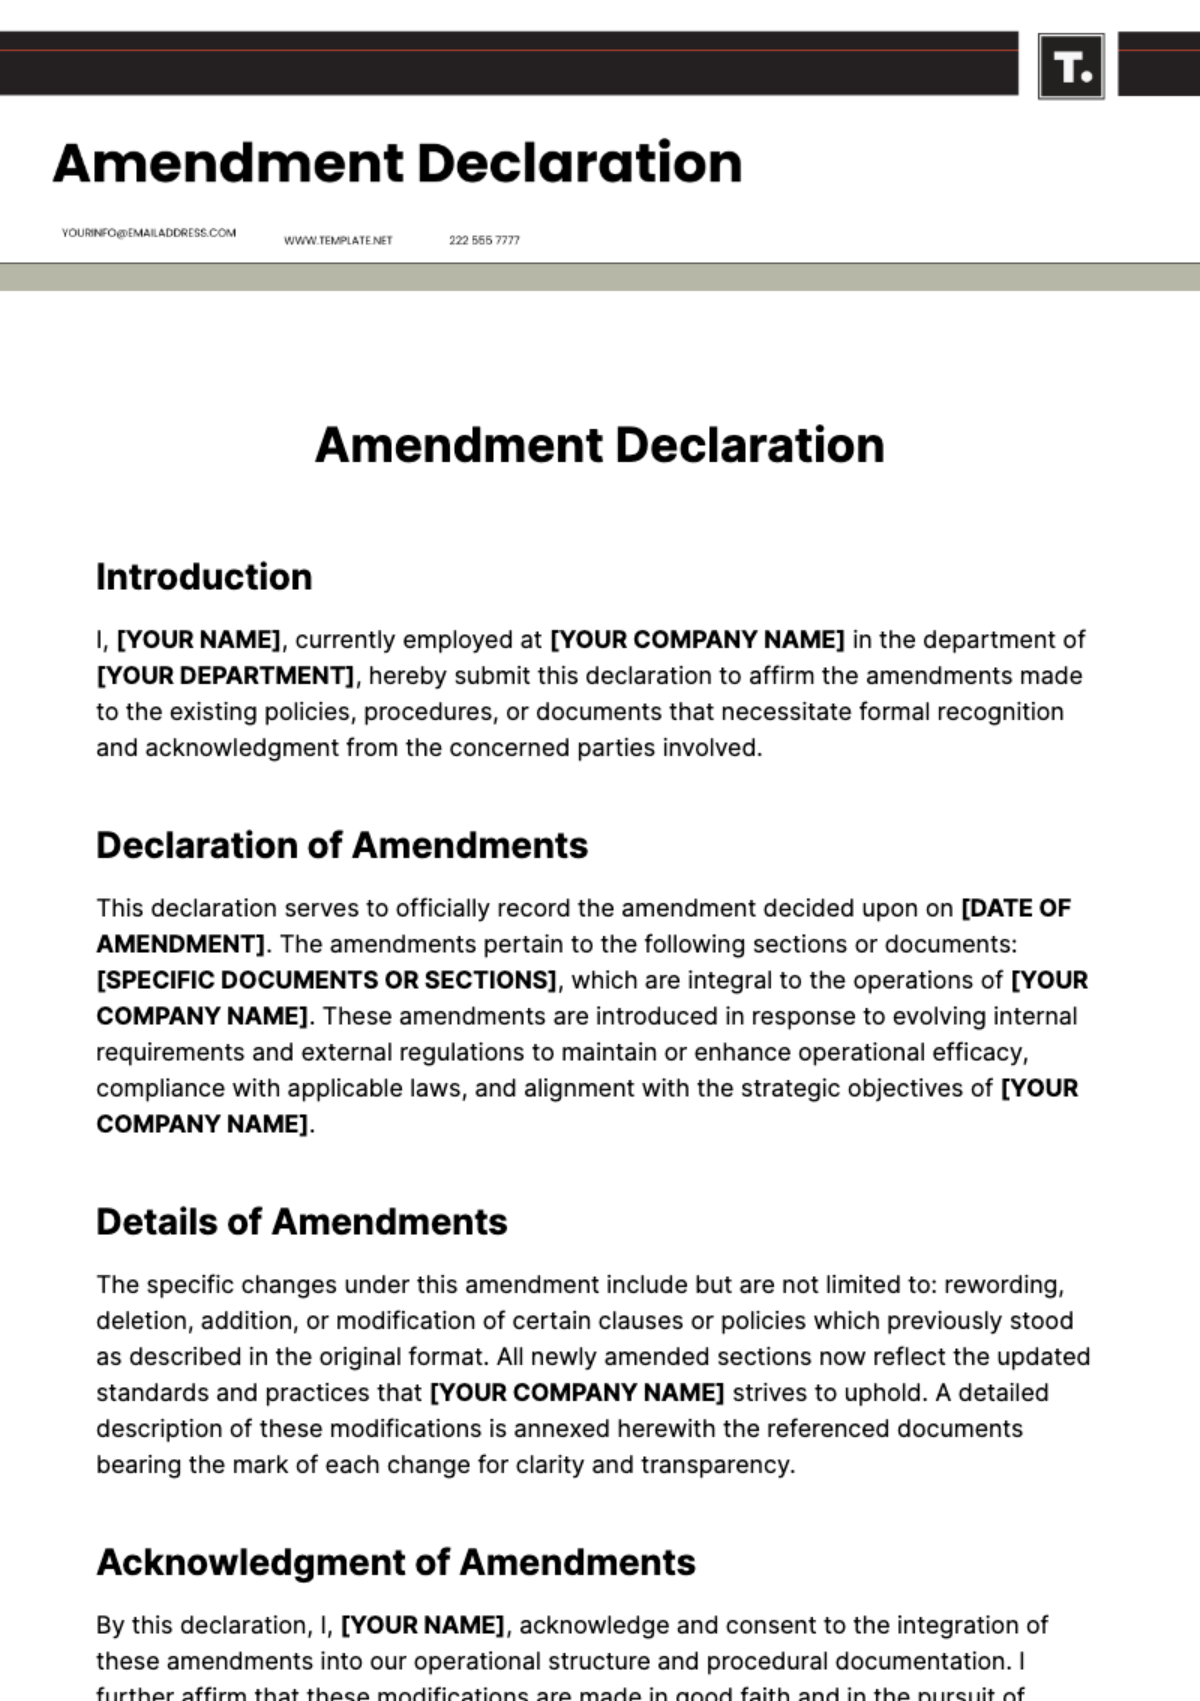 Amendment Declaration Template